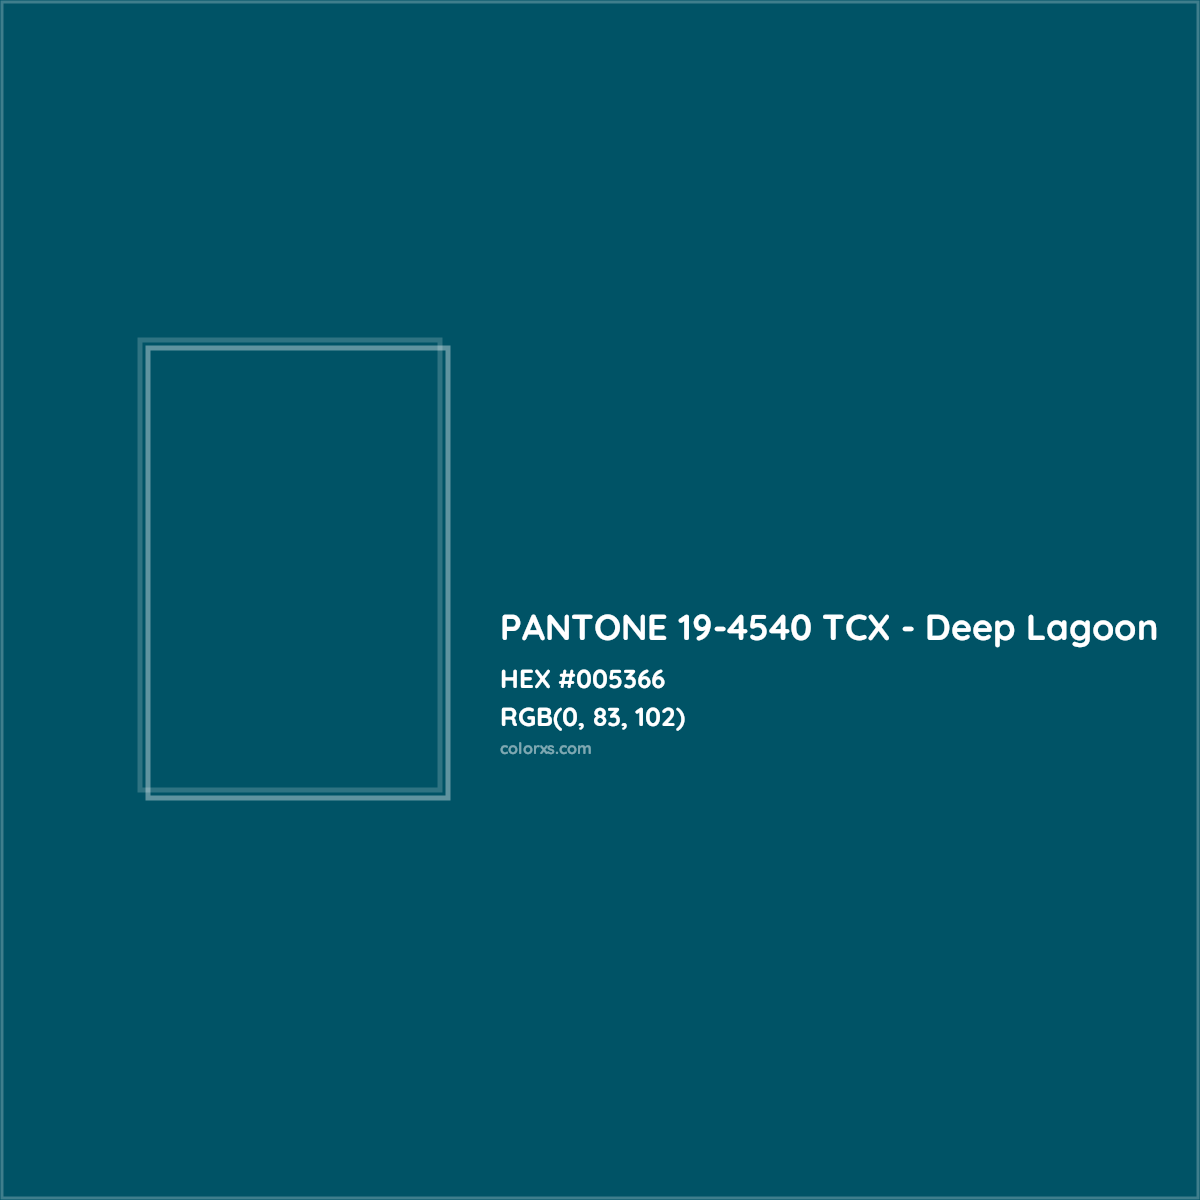 HEX #005366 PANTONE 19-4540 TCX - Deep Lagoon CMS Pantone TCX - Color Code